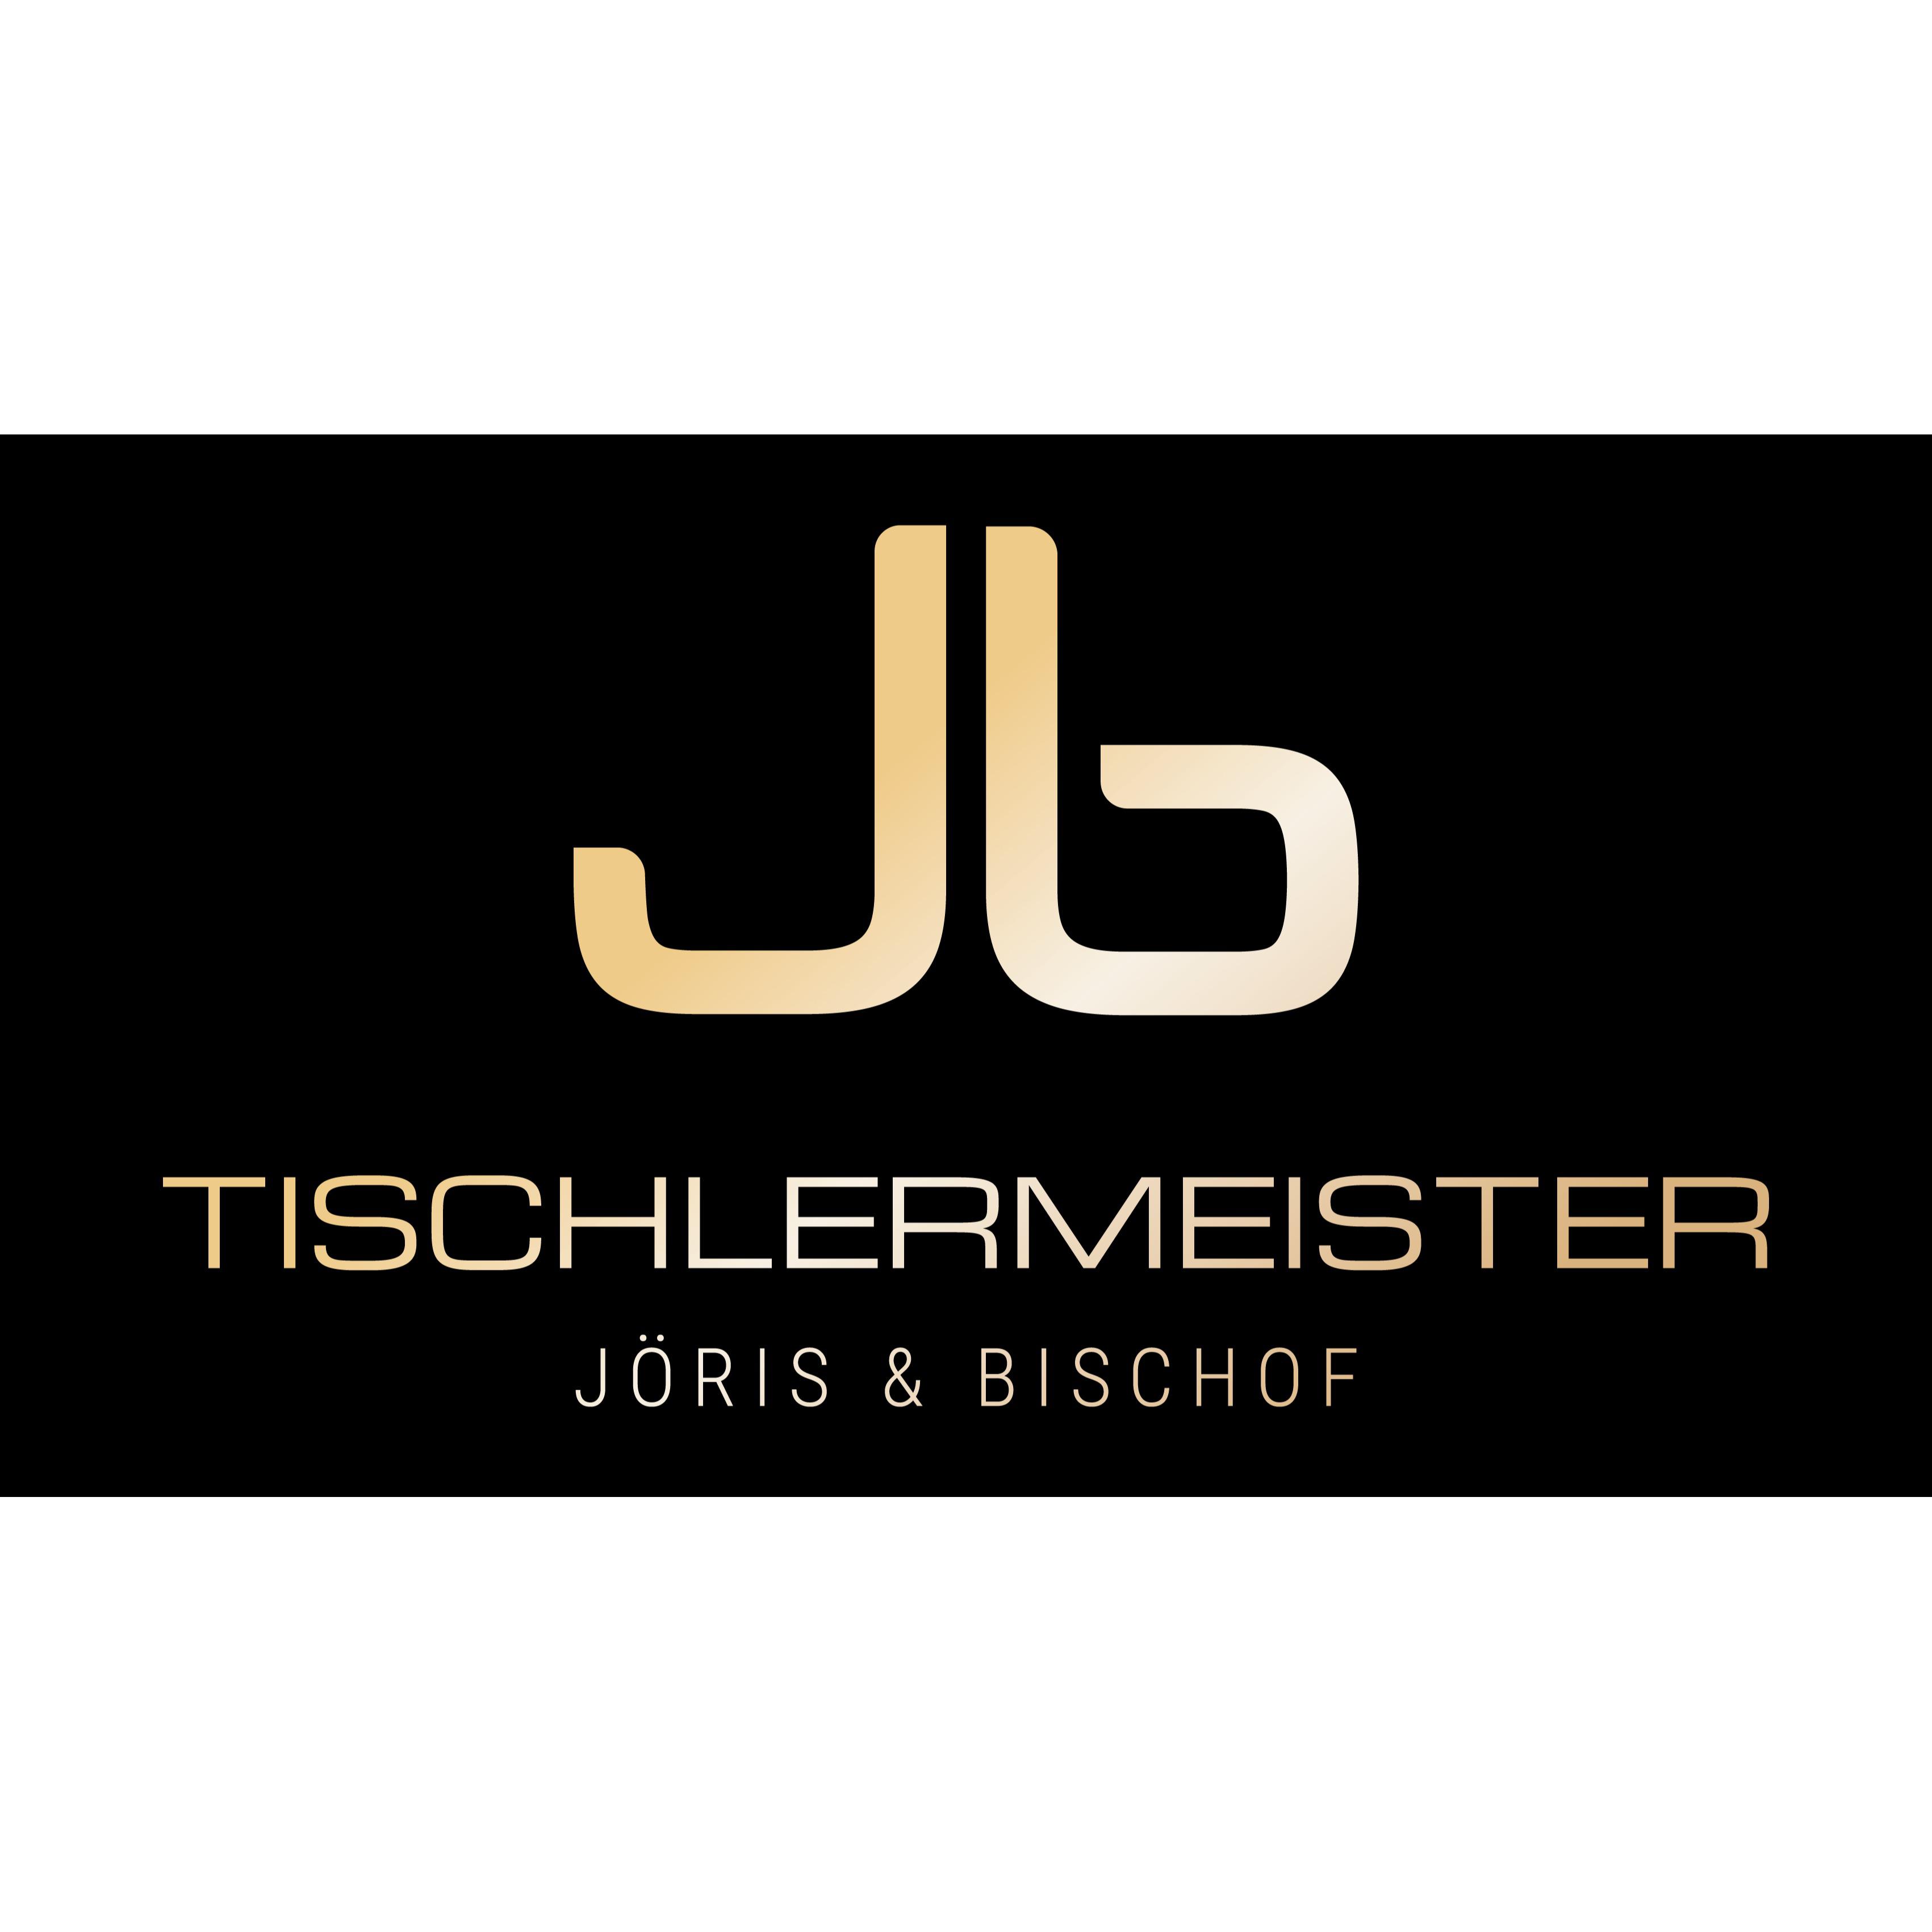 Tischlermeister Jöris & Bischof GbR in Gütersloh - Logo